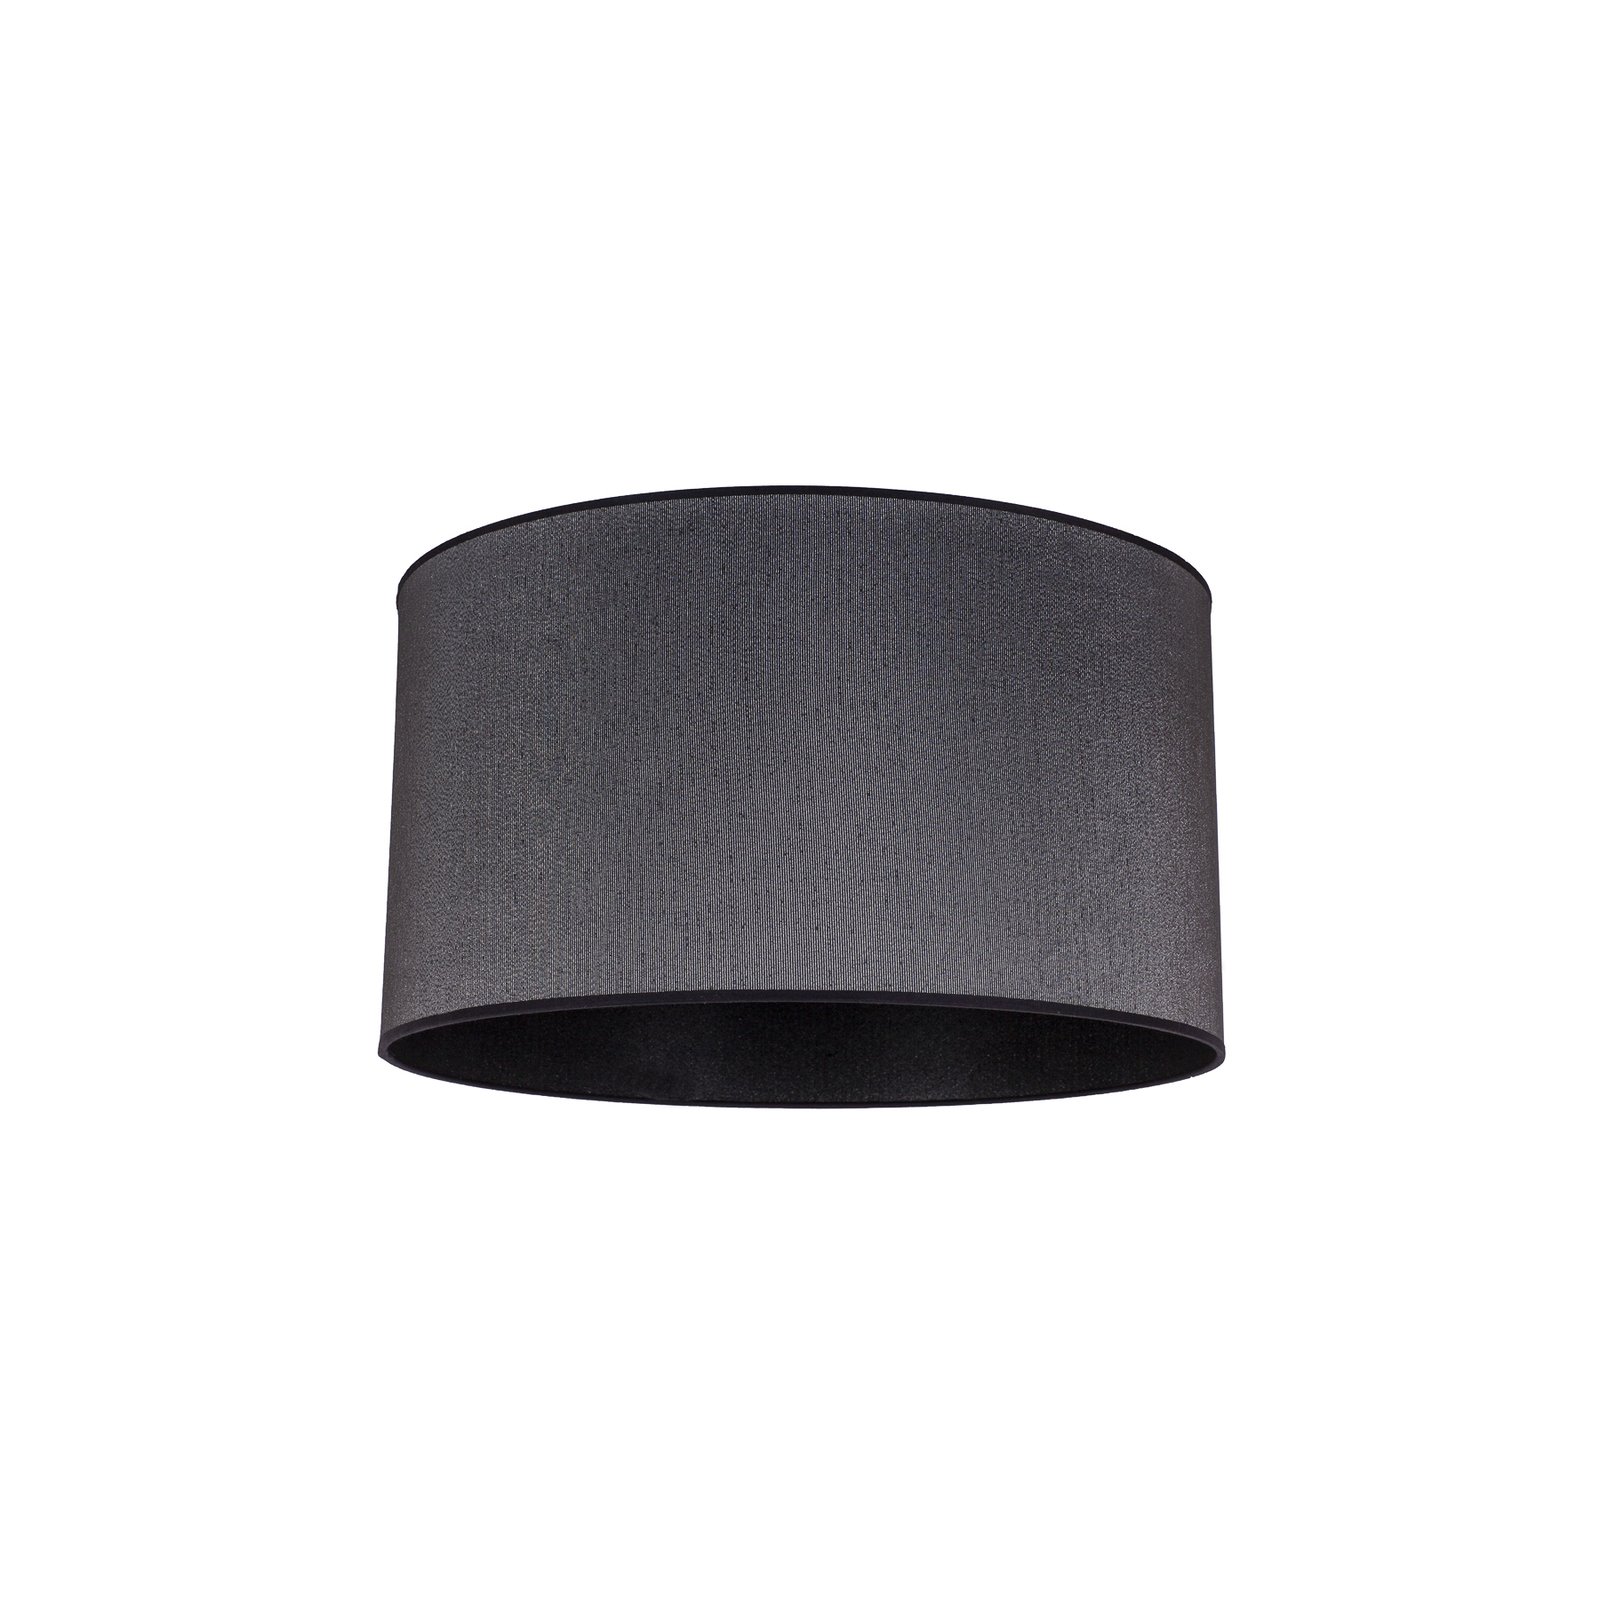 Roller lampshade Ø 40 cm, black/silver